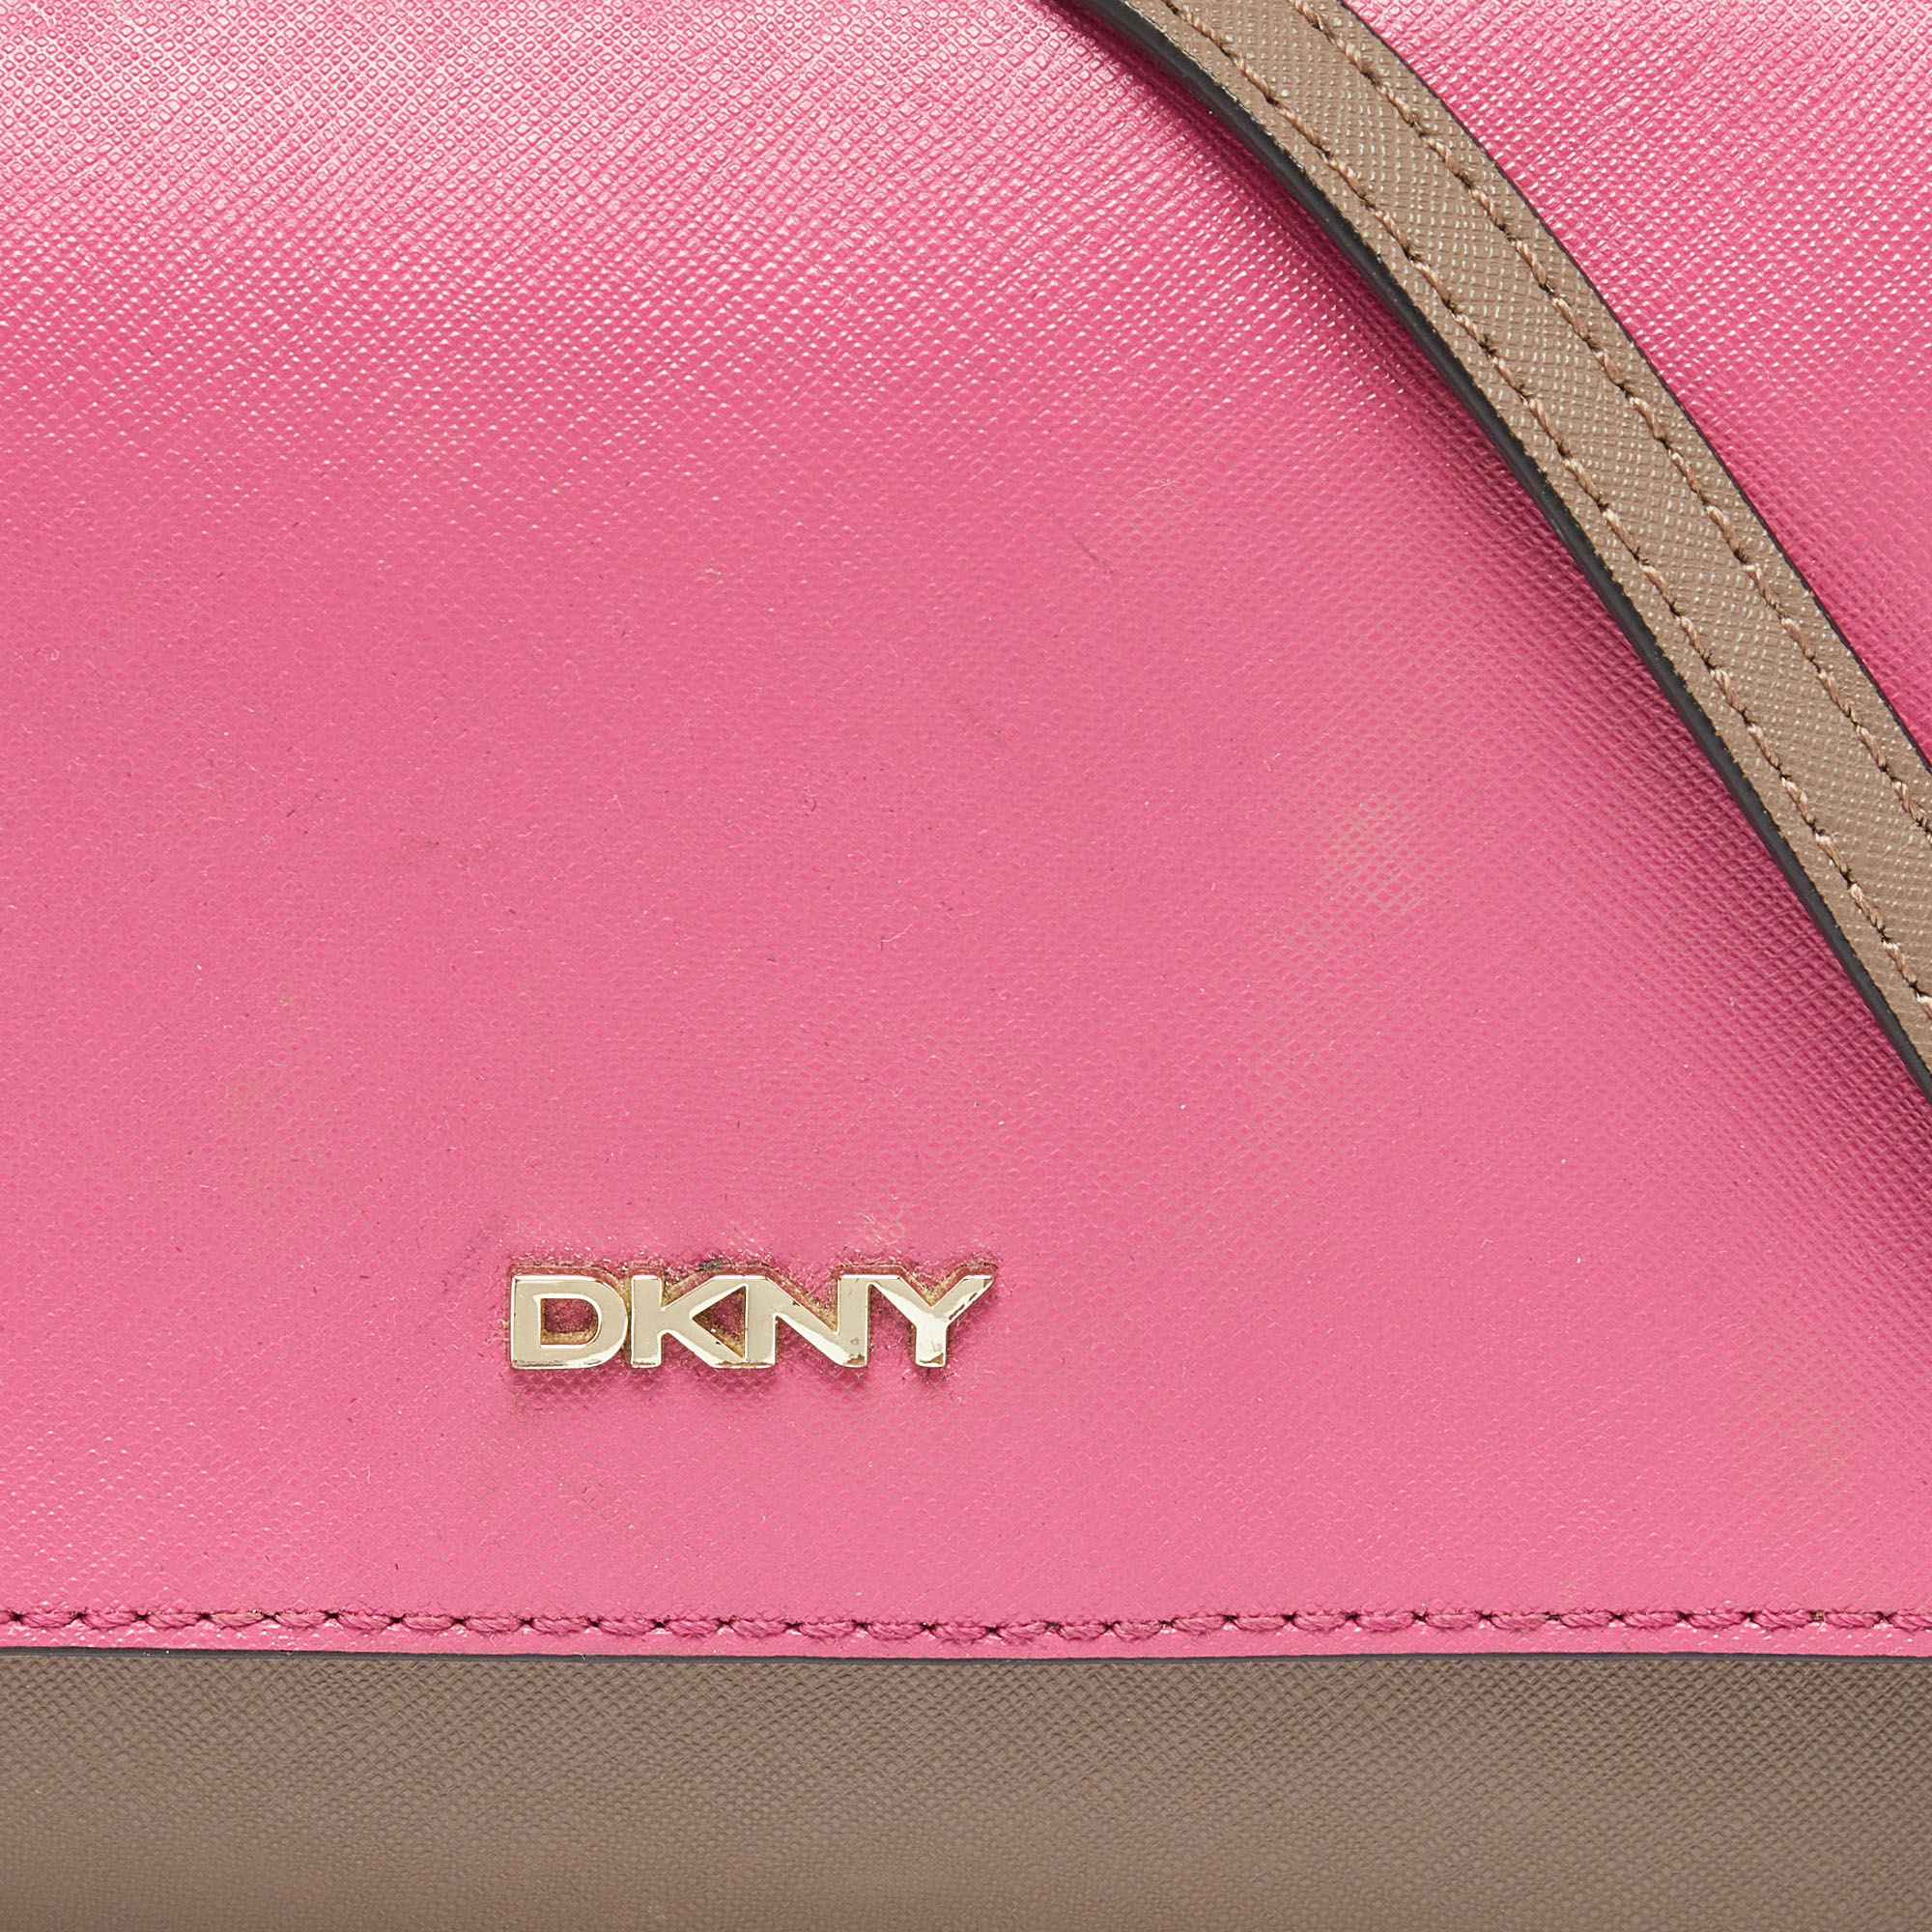 DKNY Beige/Pink Leather Bryant Park Flap Crossbody Bag